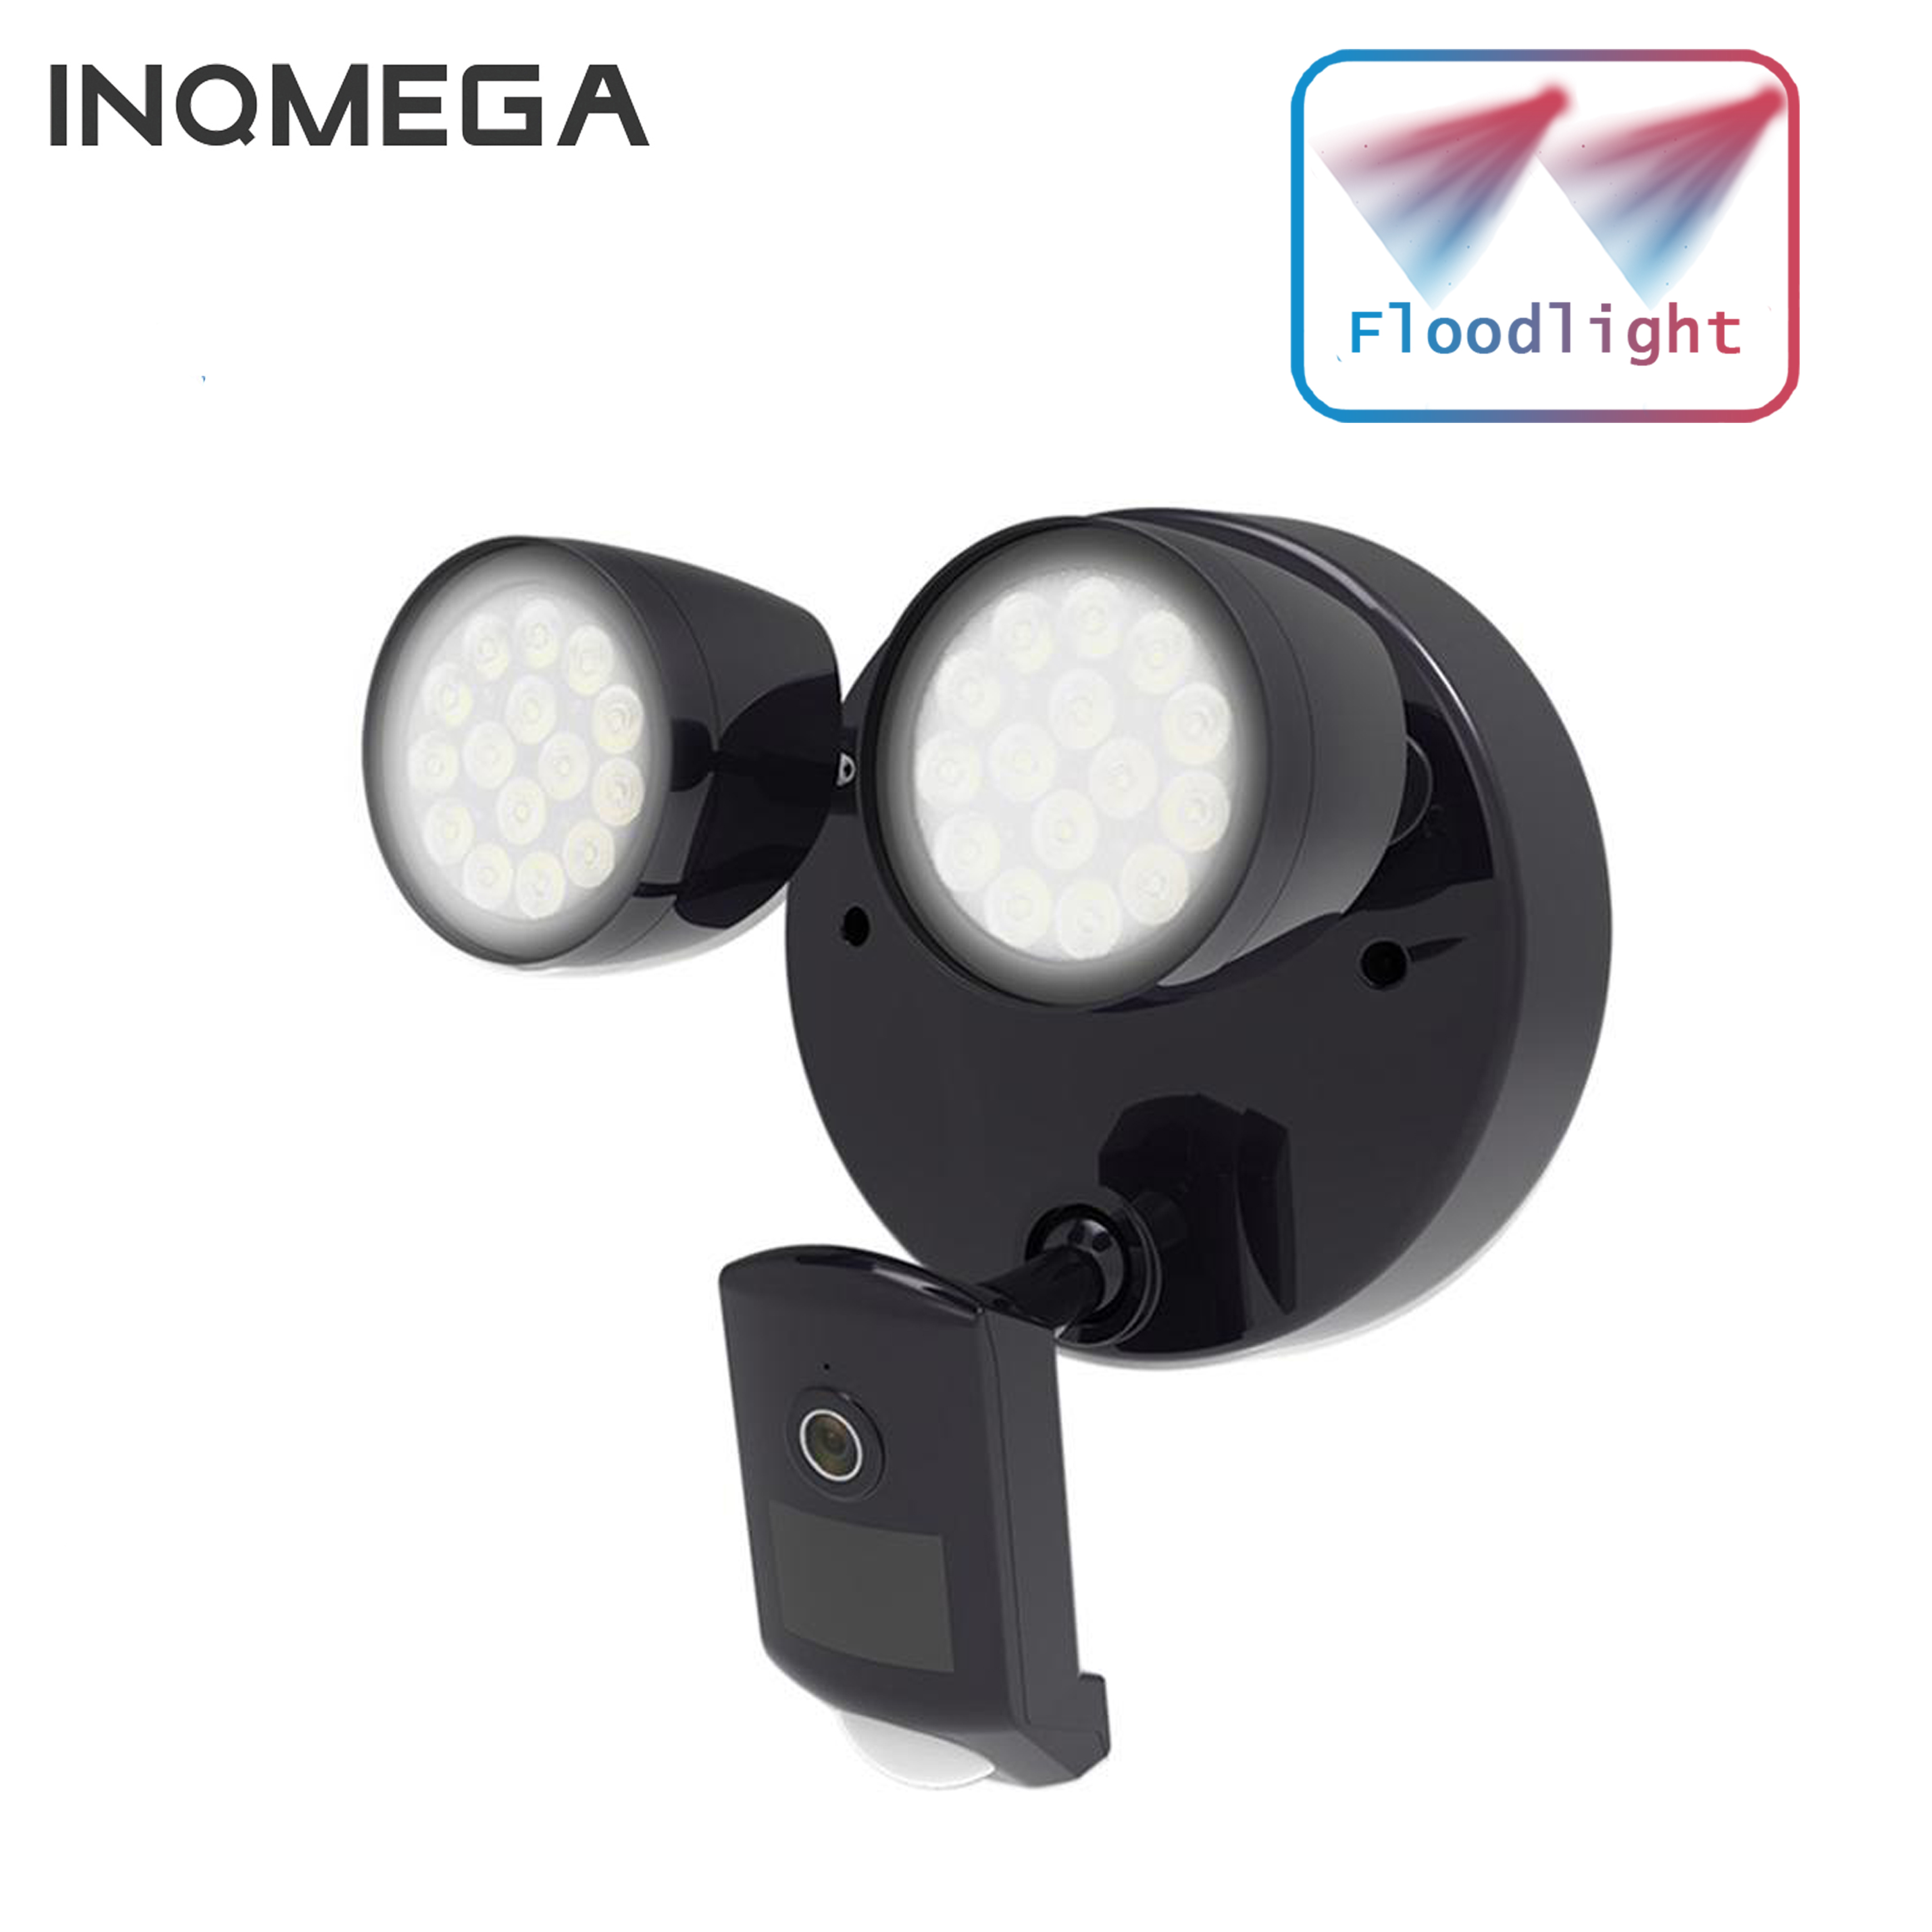 

INQMEGA 1080P IP66 Waterproof IP Camera 2 LED Floodlight Wifi Camera H.264 HD Night Version Motion-Detection Home Securi